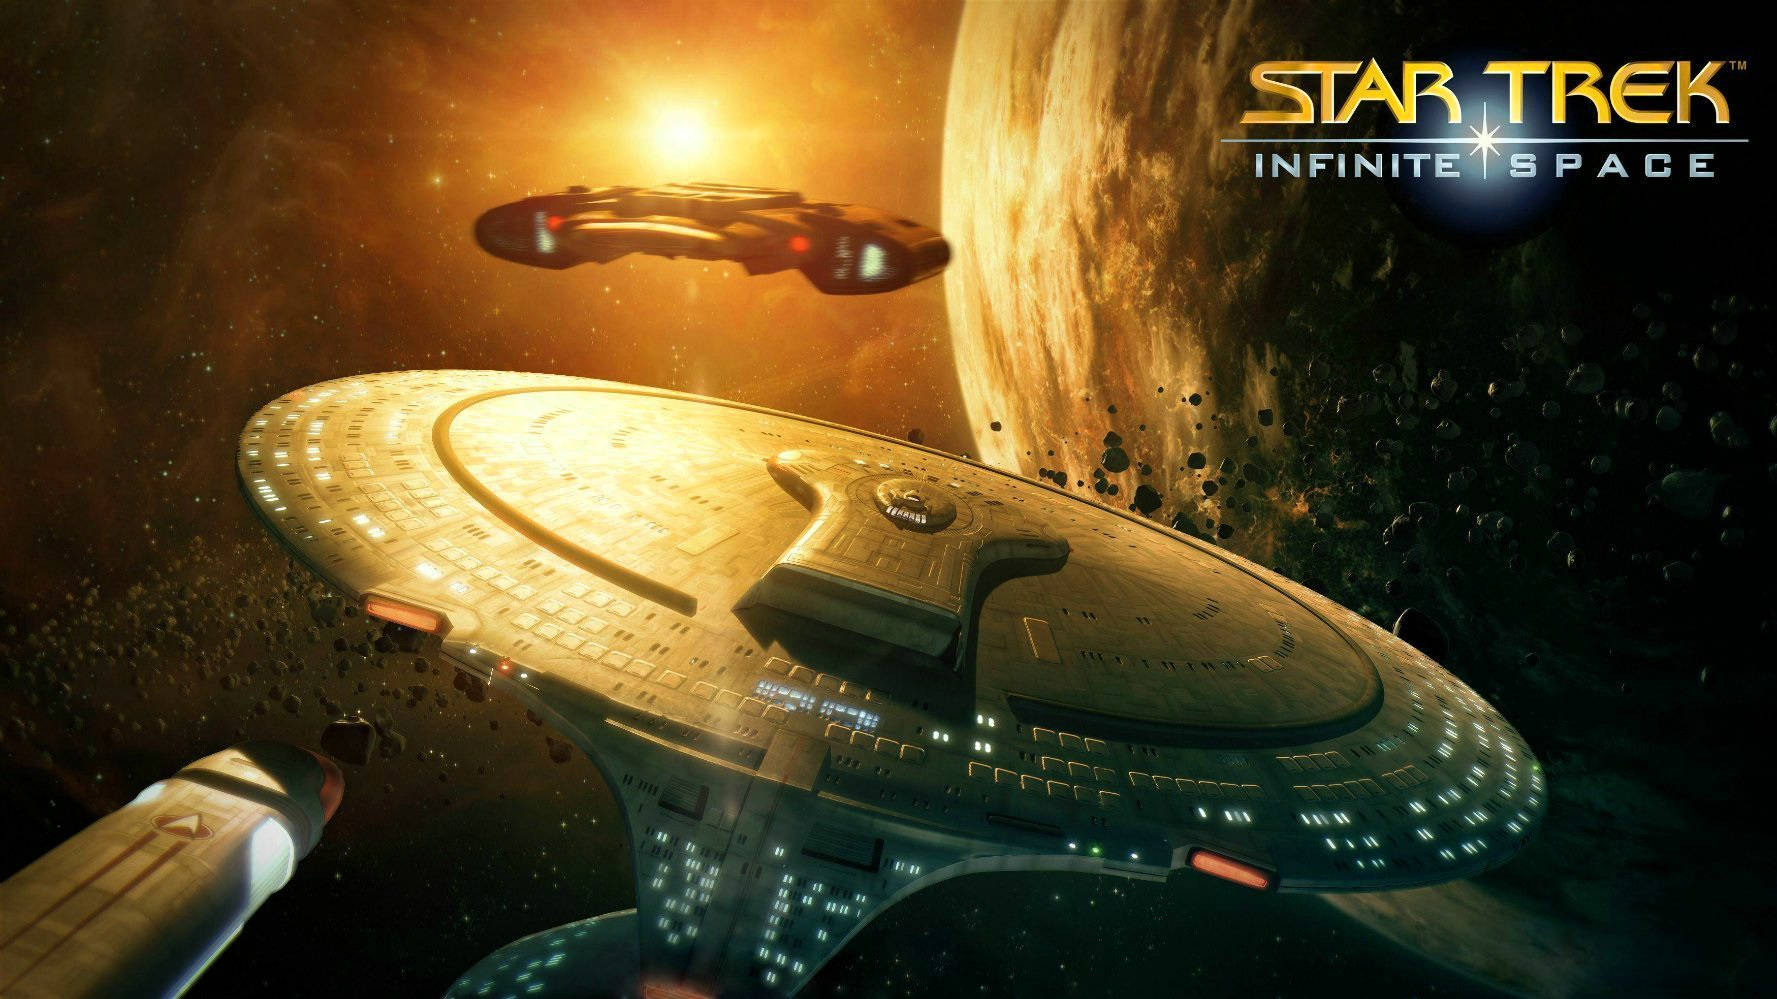 Star Trek Starship Star Trek Infinite Space